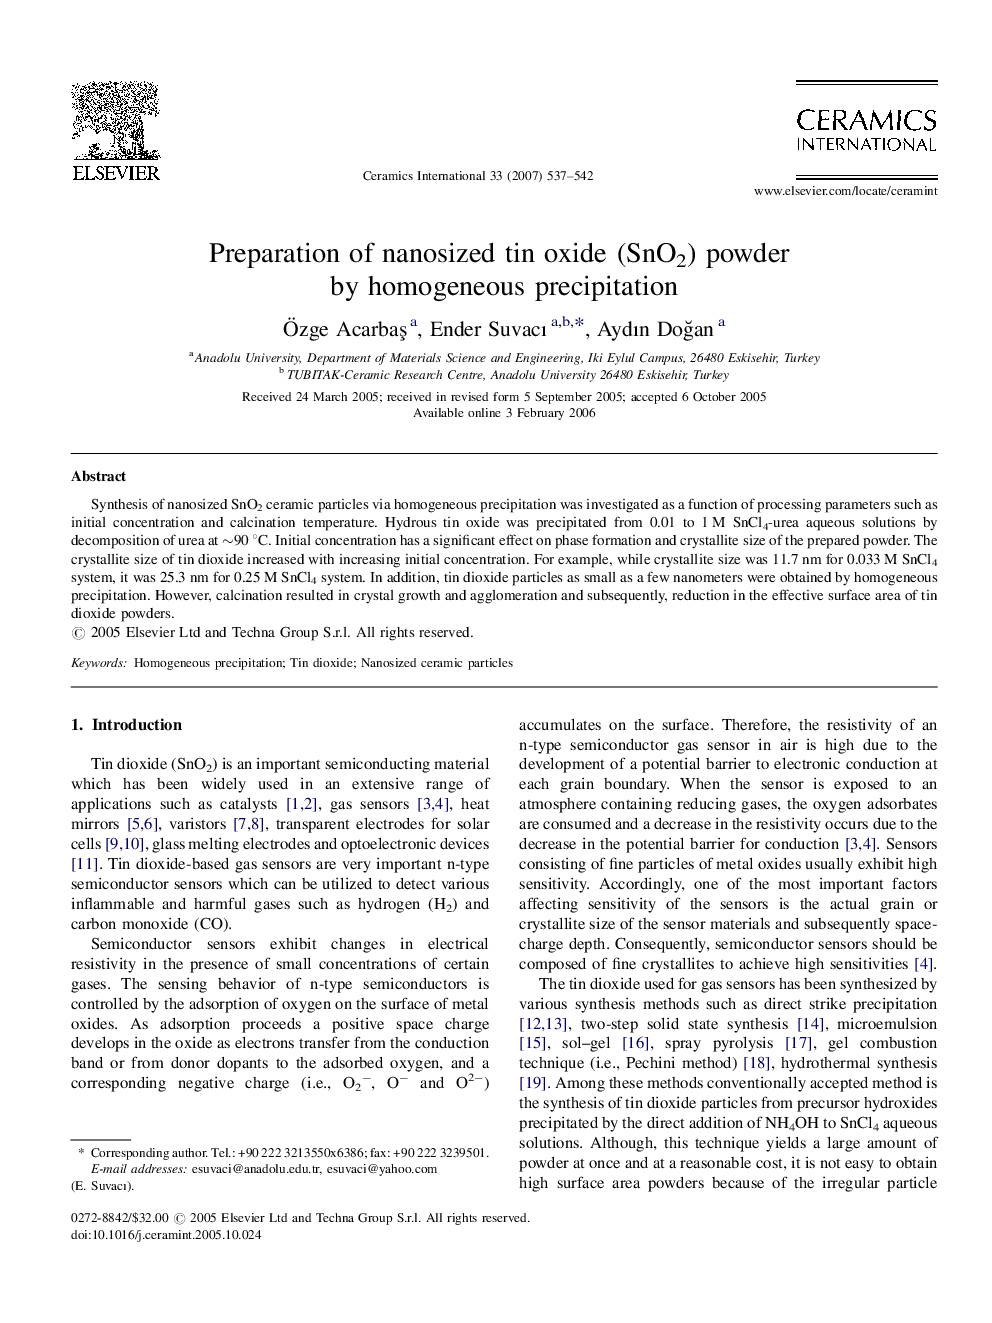 Preparation of nanosized tin oxide (SnO2) powder by homogeneous precipitation